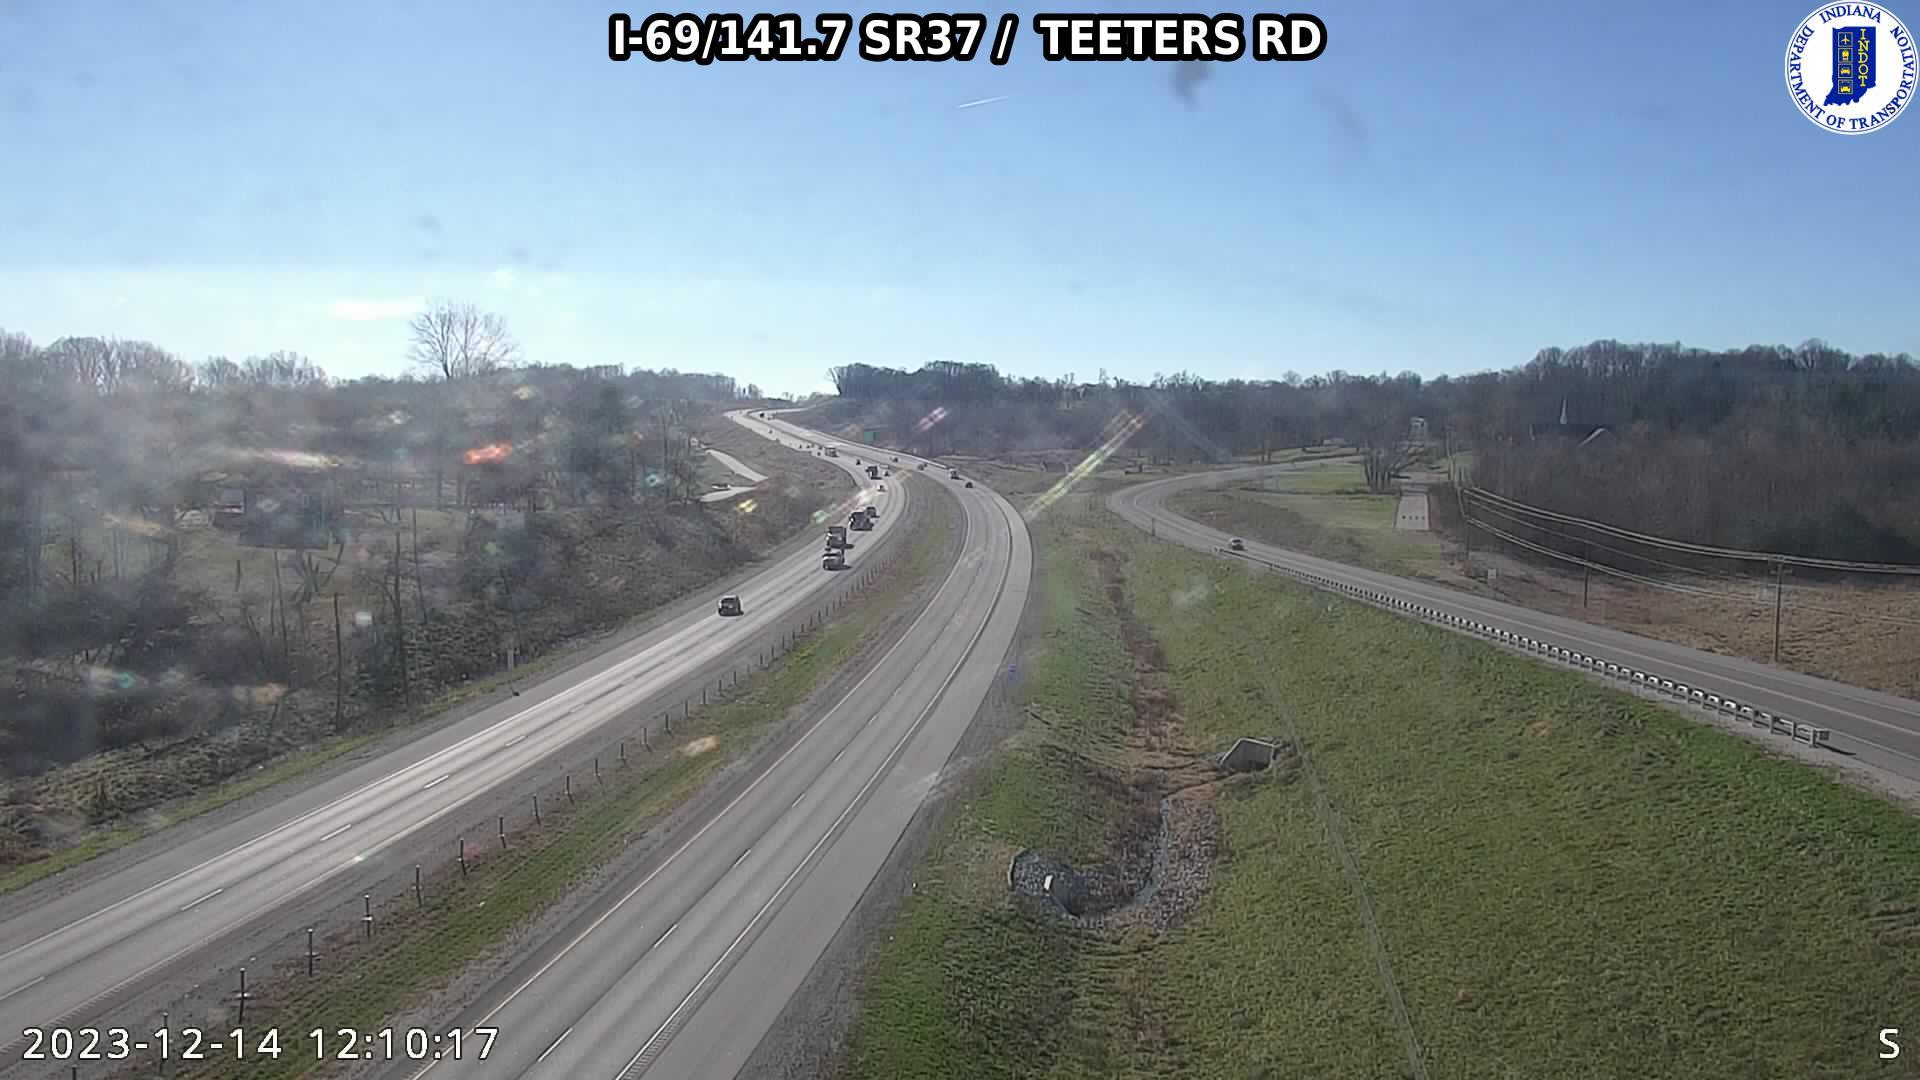 Traffic Cam Woodcrest: I-69: I-69/141.7 SR37 - TEETERS RD: I-69/141.7 SR37 - TEETERS RD Player